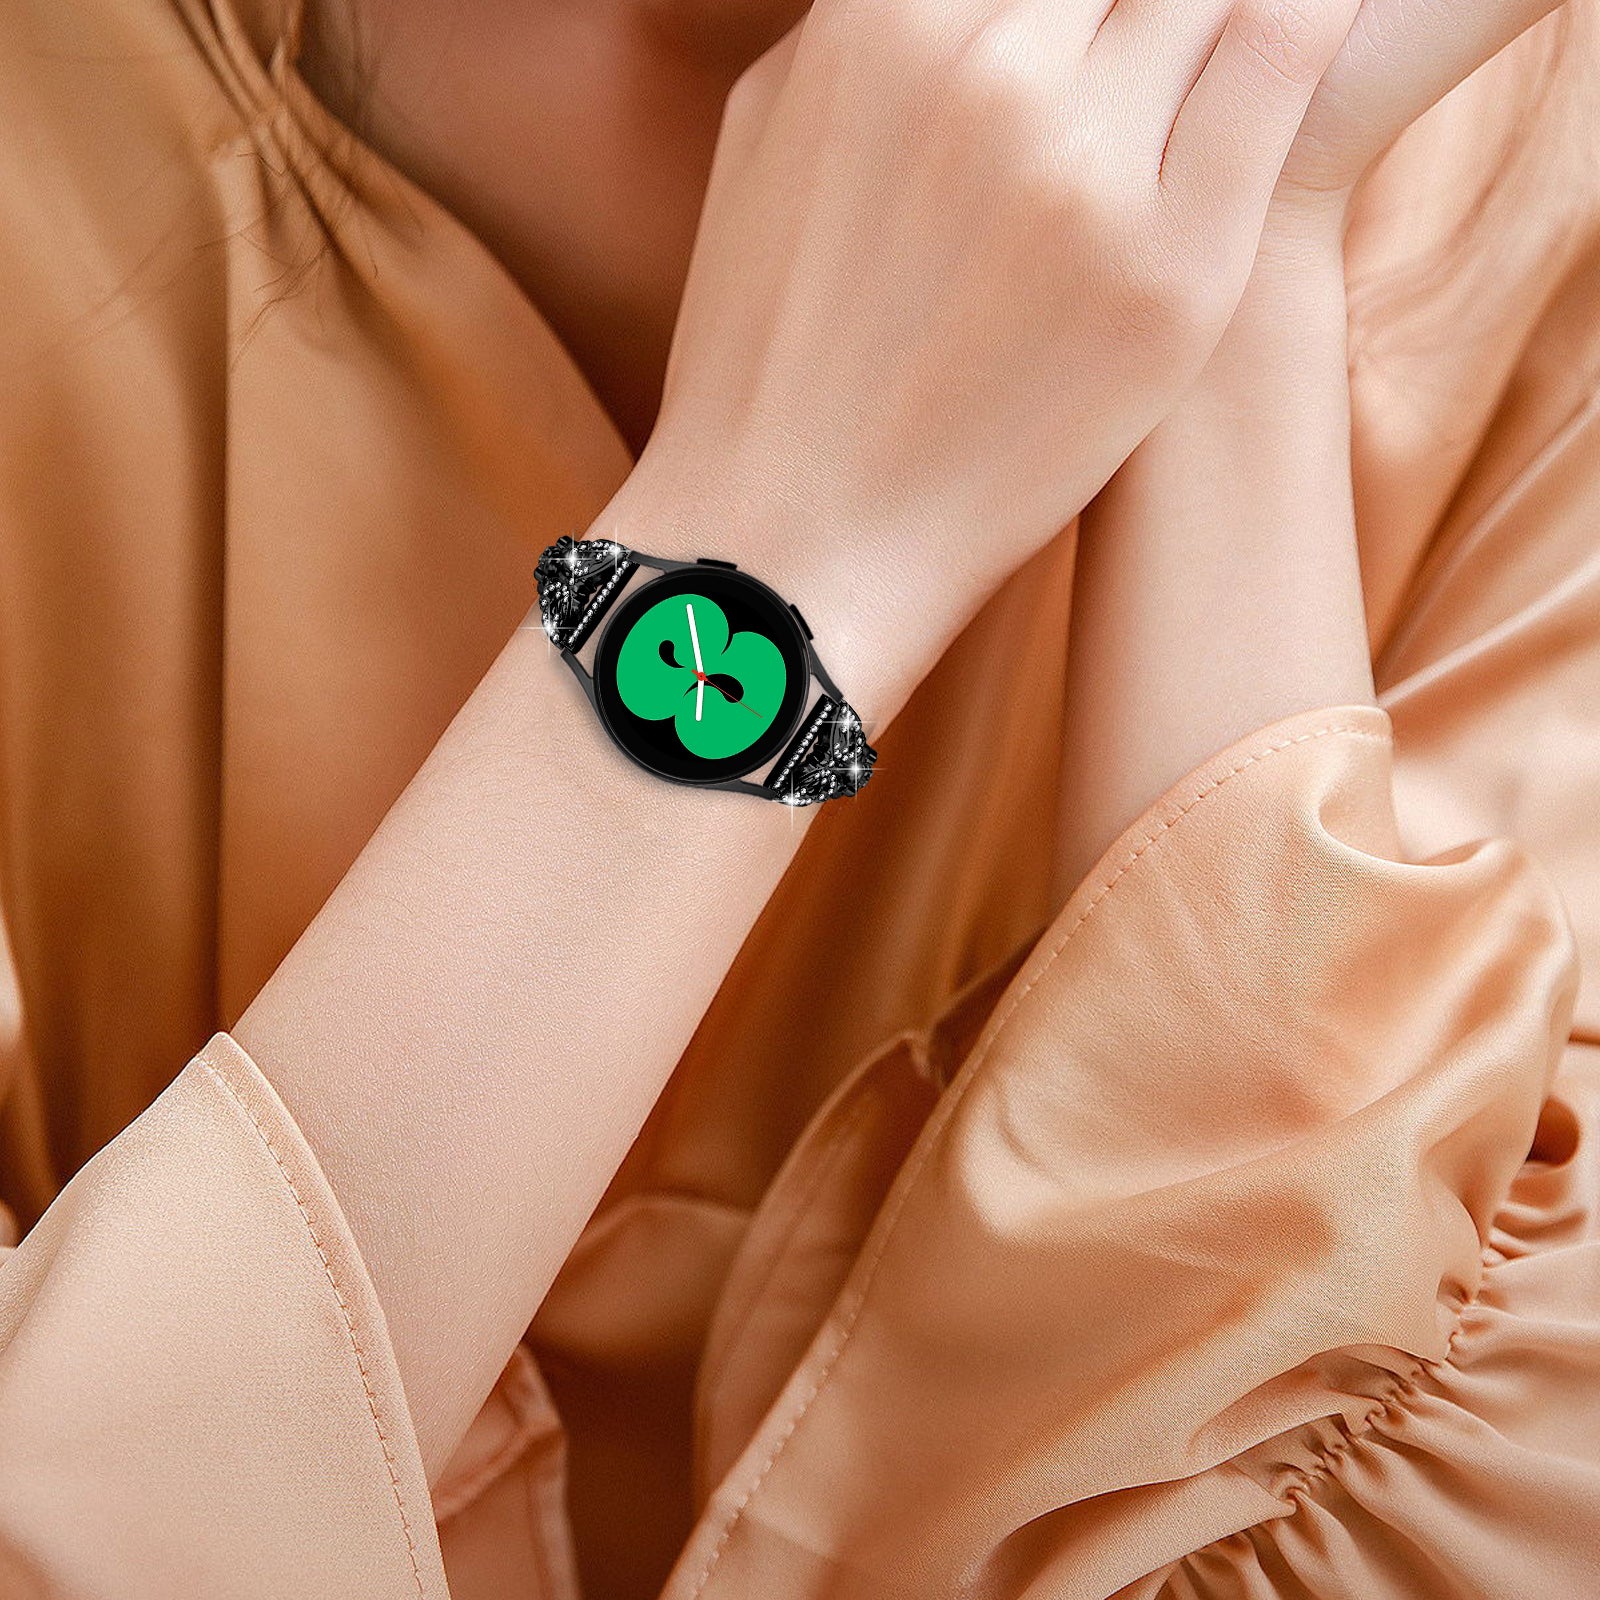 Uniqkart for Samsung Galaxy Watch6 40mm 44mm Stainless Steel Watch Strap Butterfly Rhinestone Decor 20mm Metal Band - Black